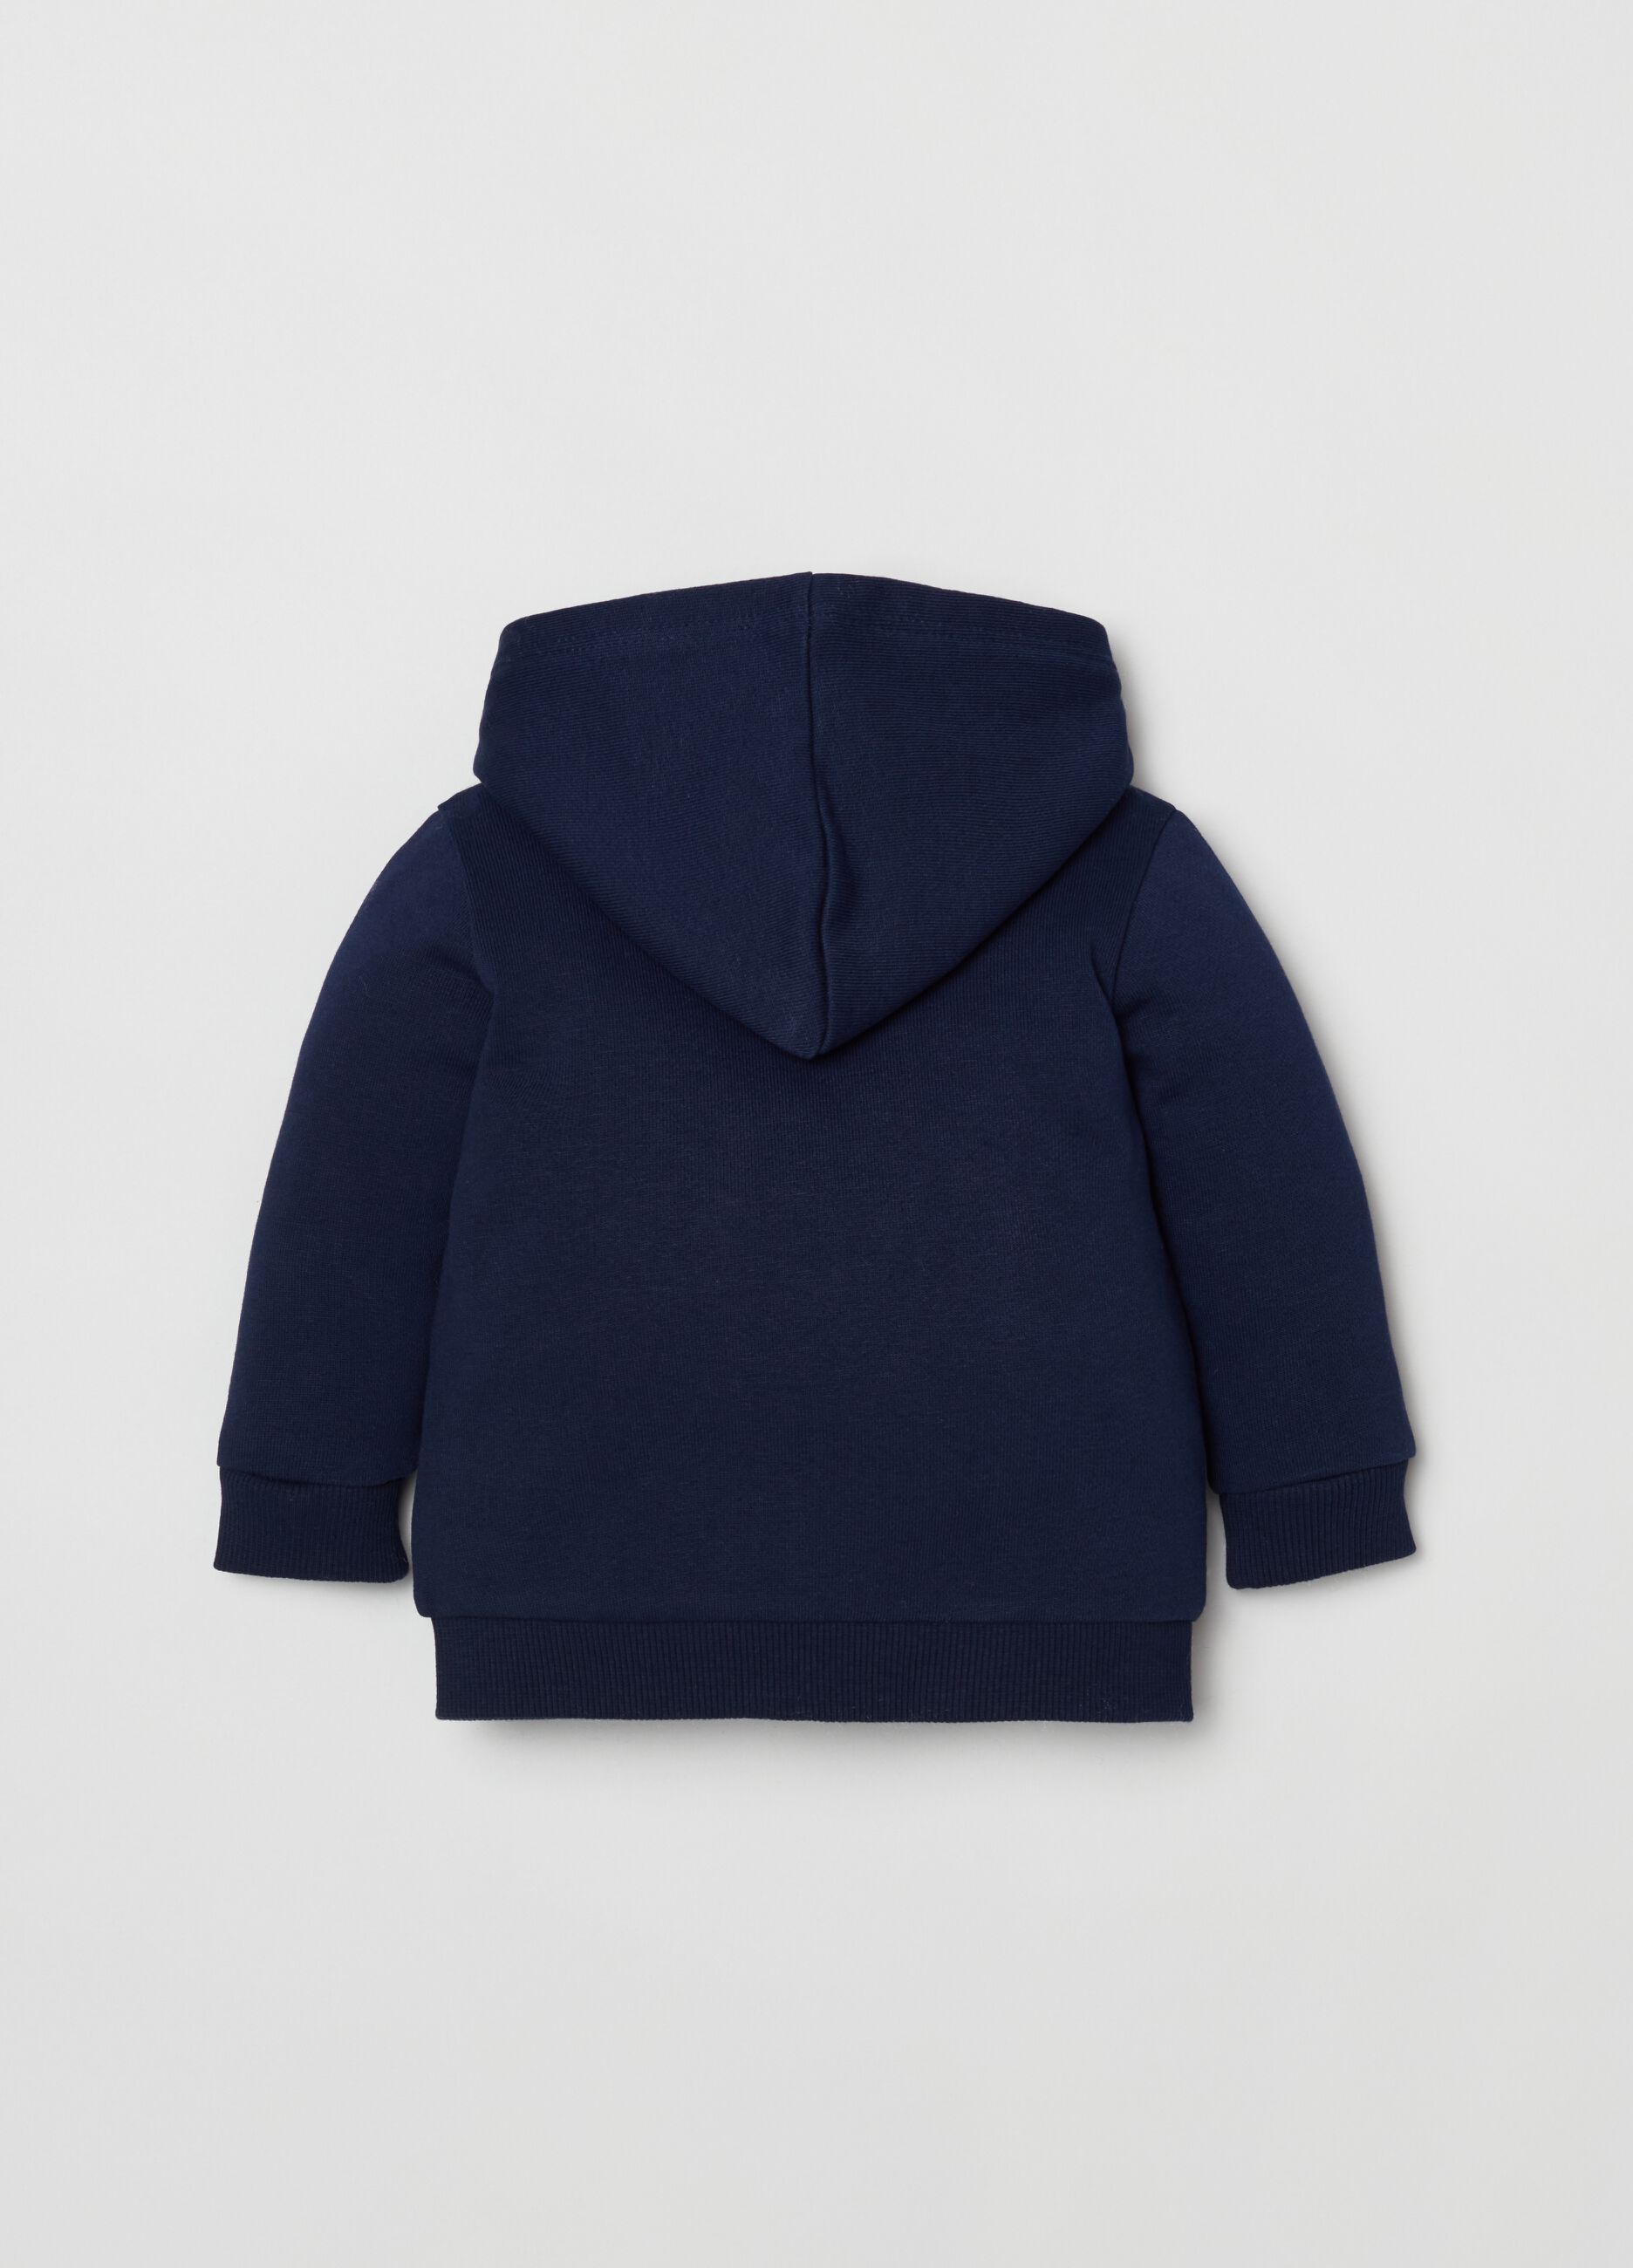 Cotton full-zip sweatshirt with hood.